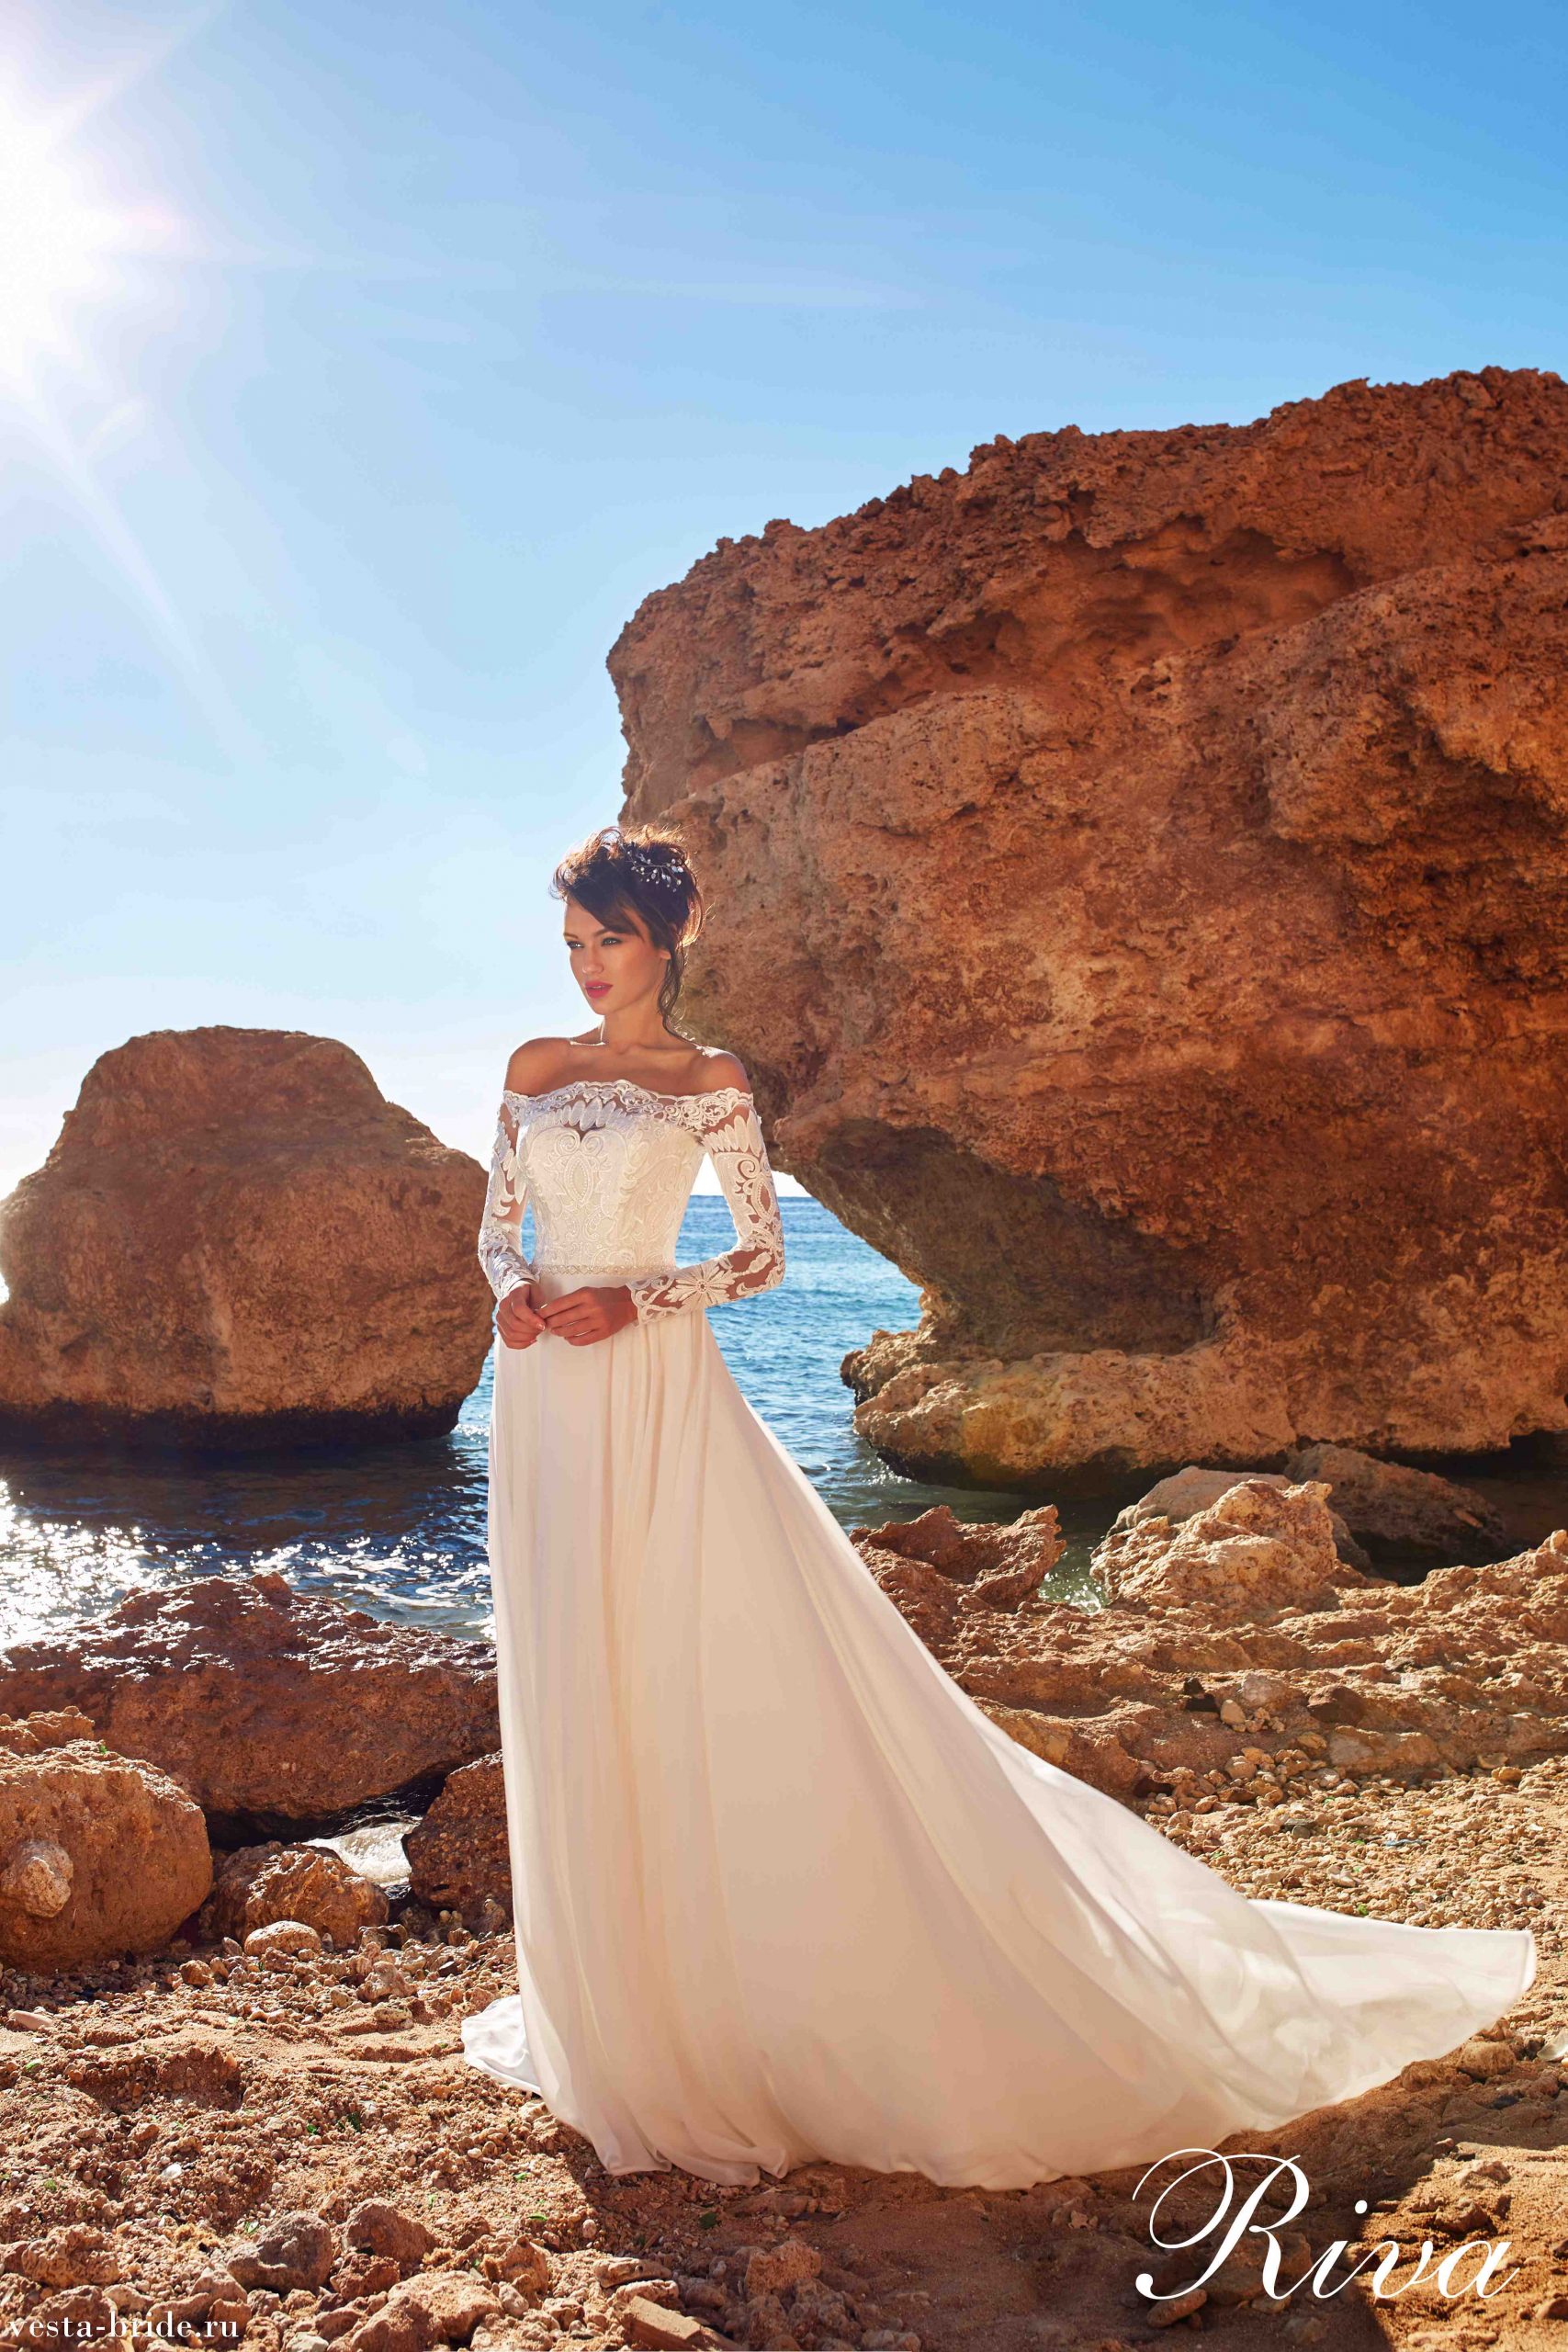 151rh2i8yiaewmm4ac5eam1v scaled Кружевное свадебное платье Ампир (в греческом стиле) Riva